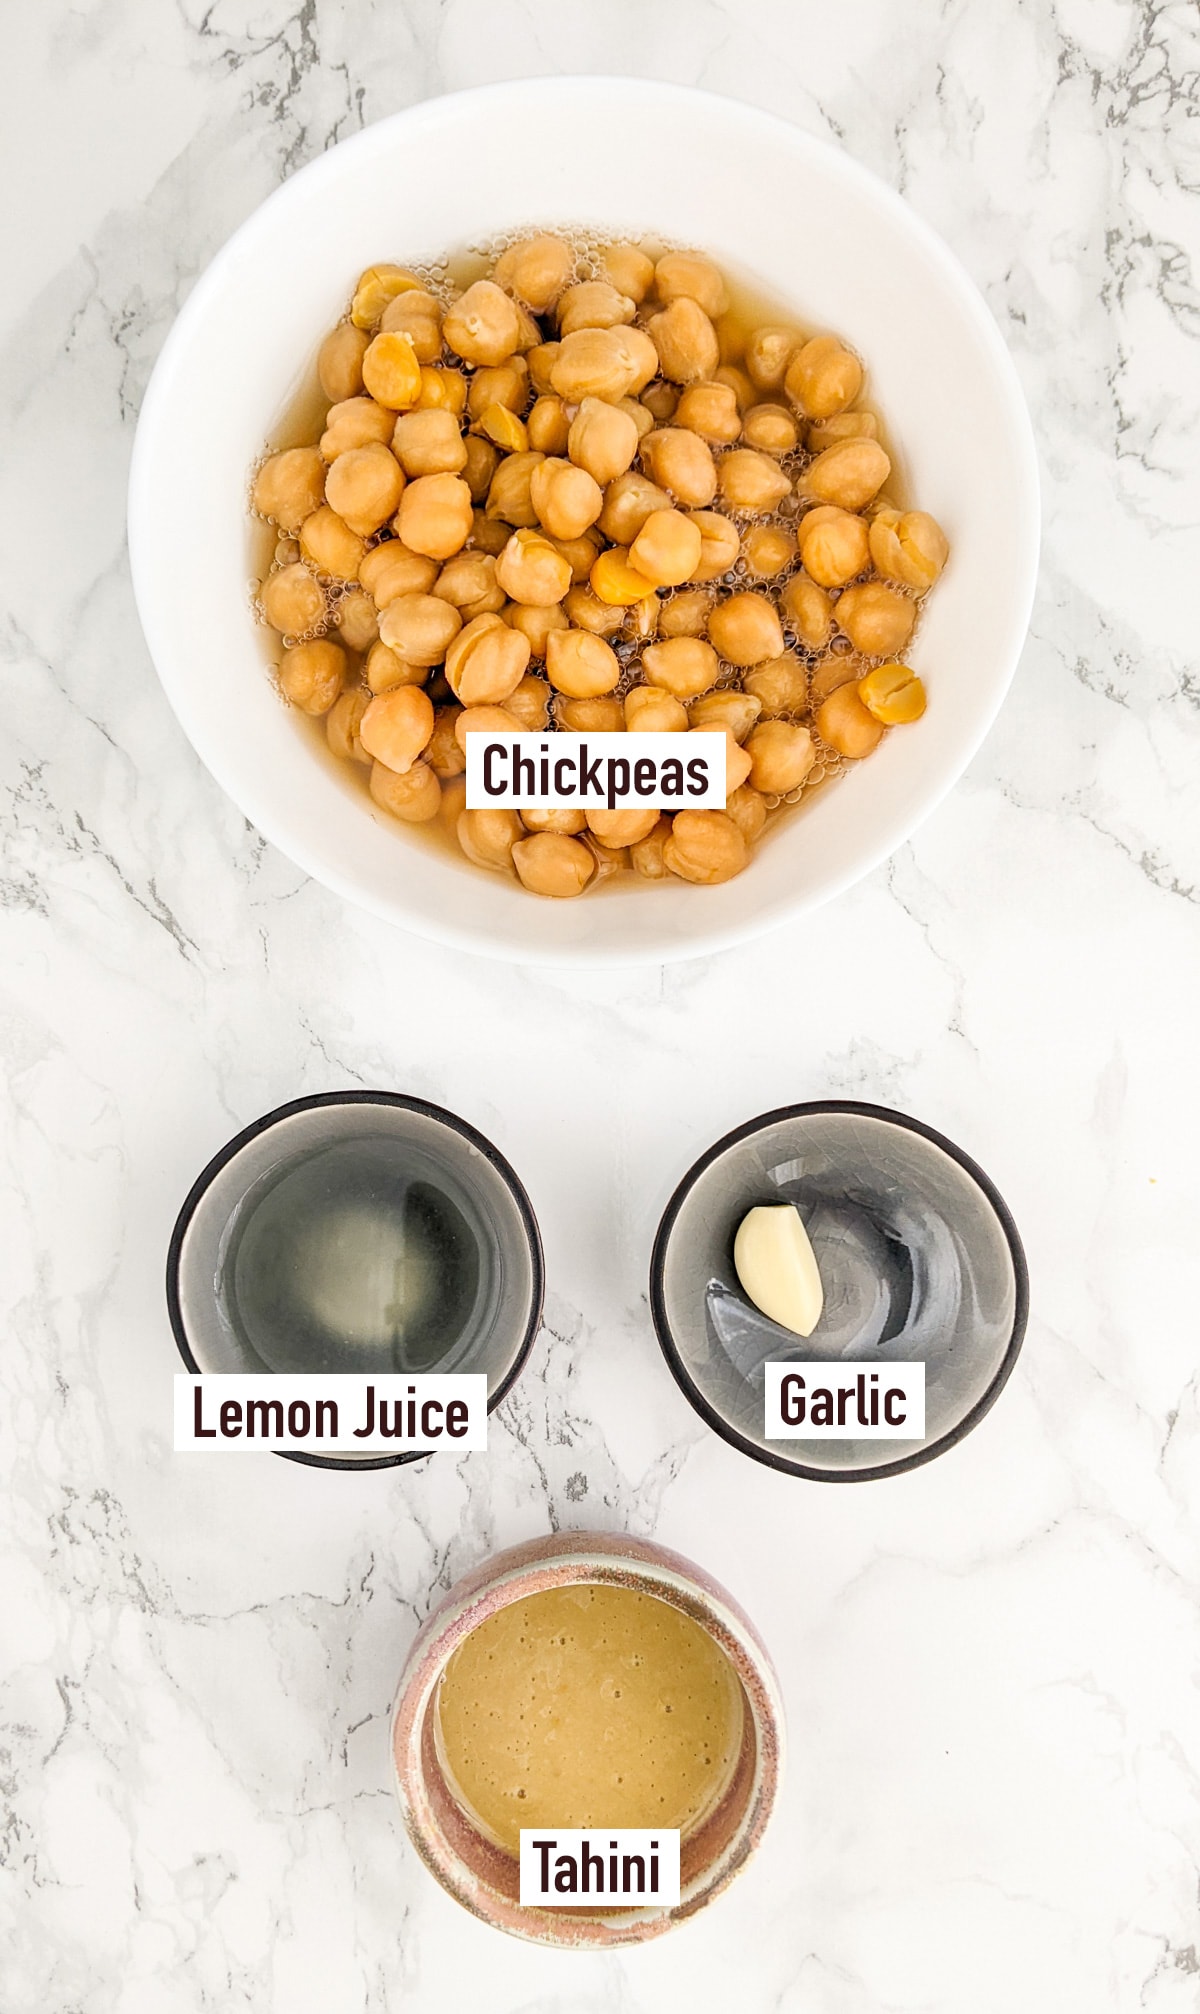 Top view of chickpeas near a tahini, garlic clove, and lemon juice.